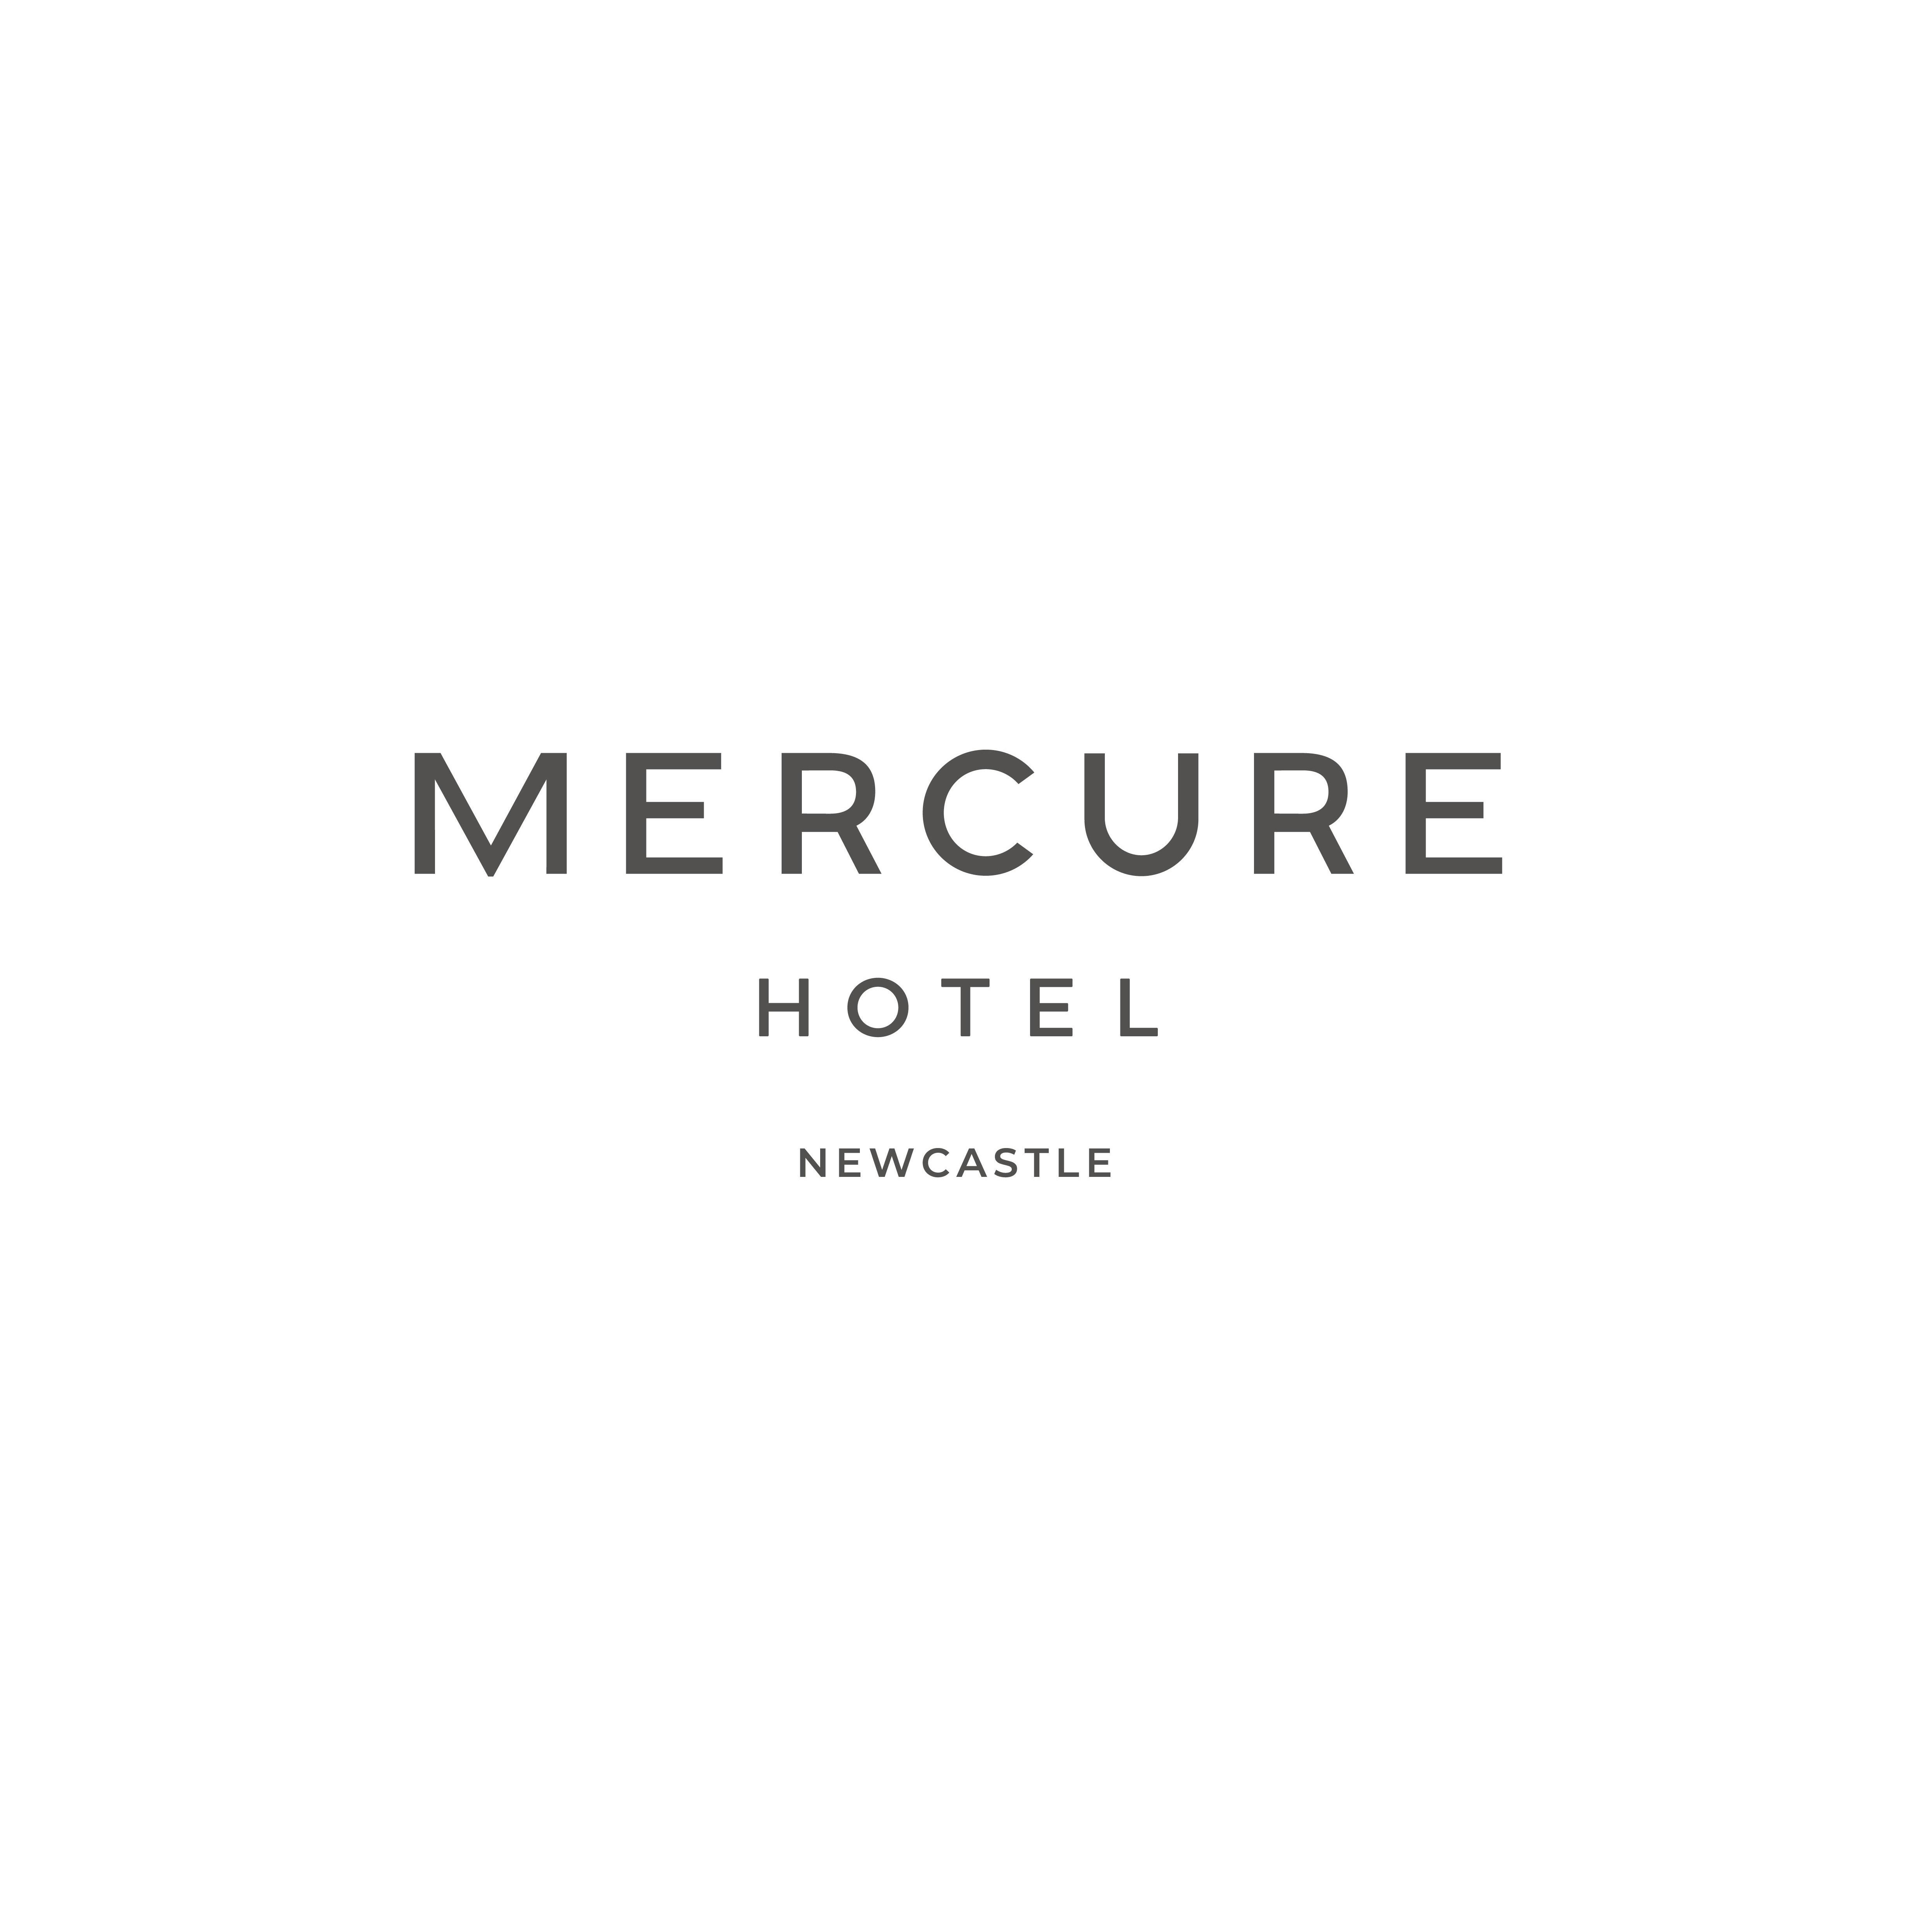 Mercure Newcastle - Newcastle, NSW 2302 - (02) 4086 6300 | ShowMeLocal.com